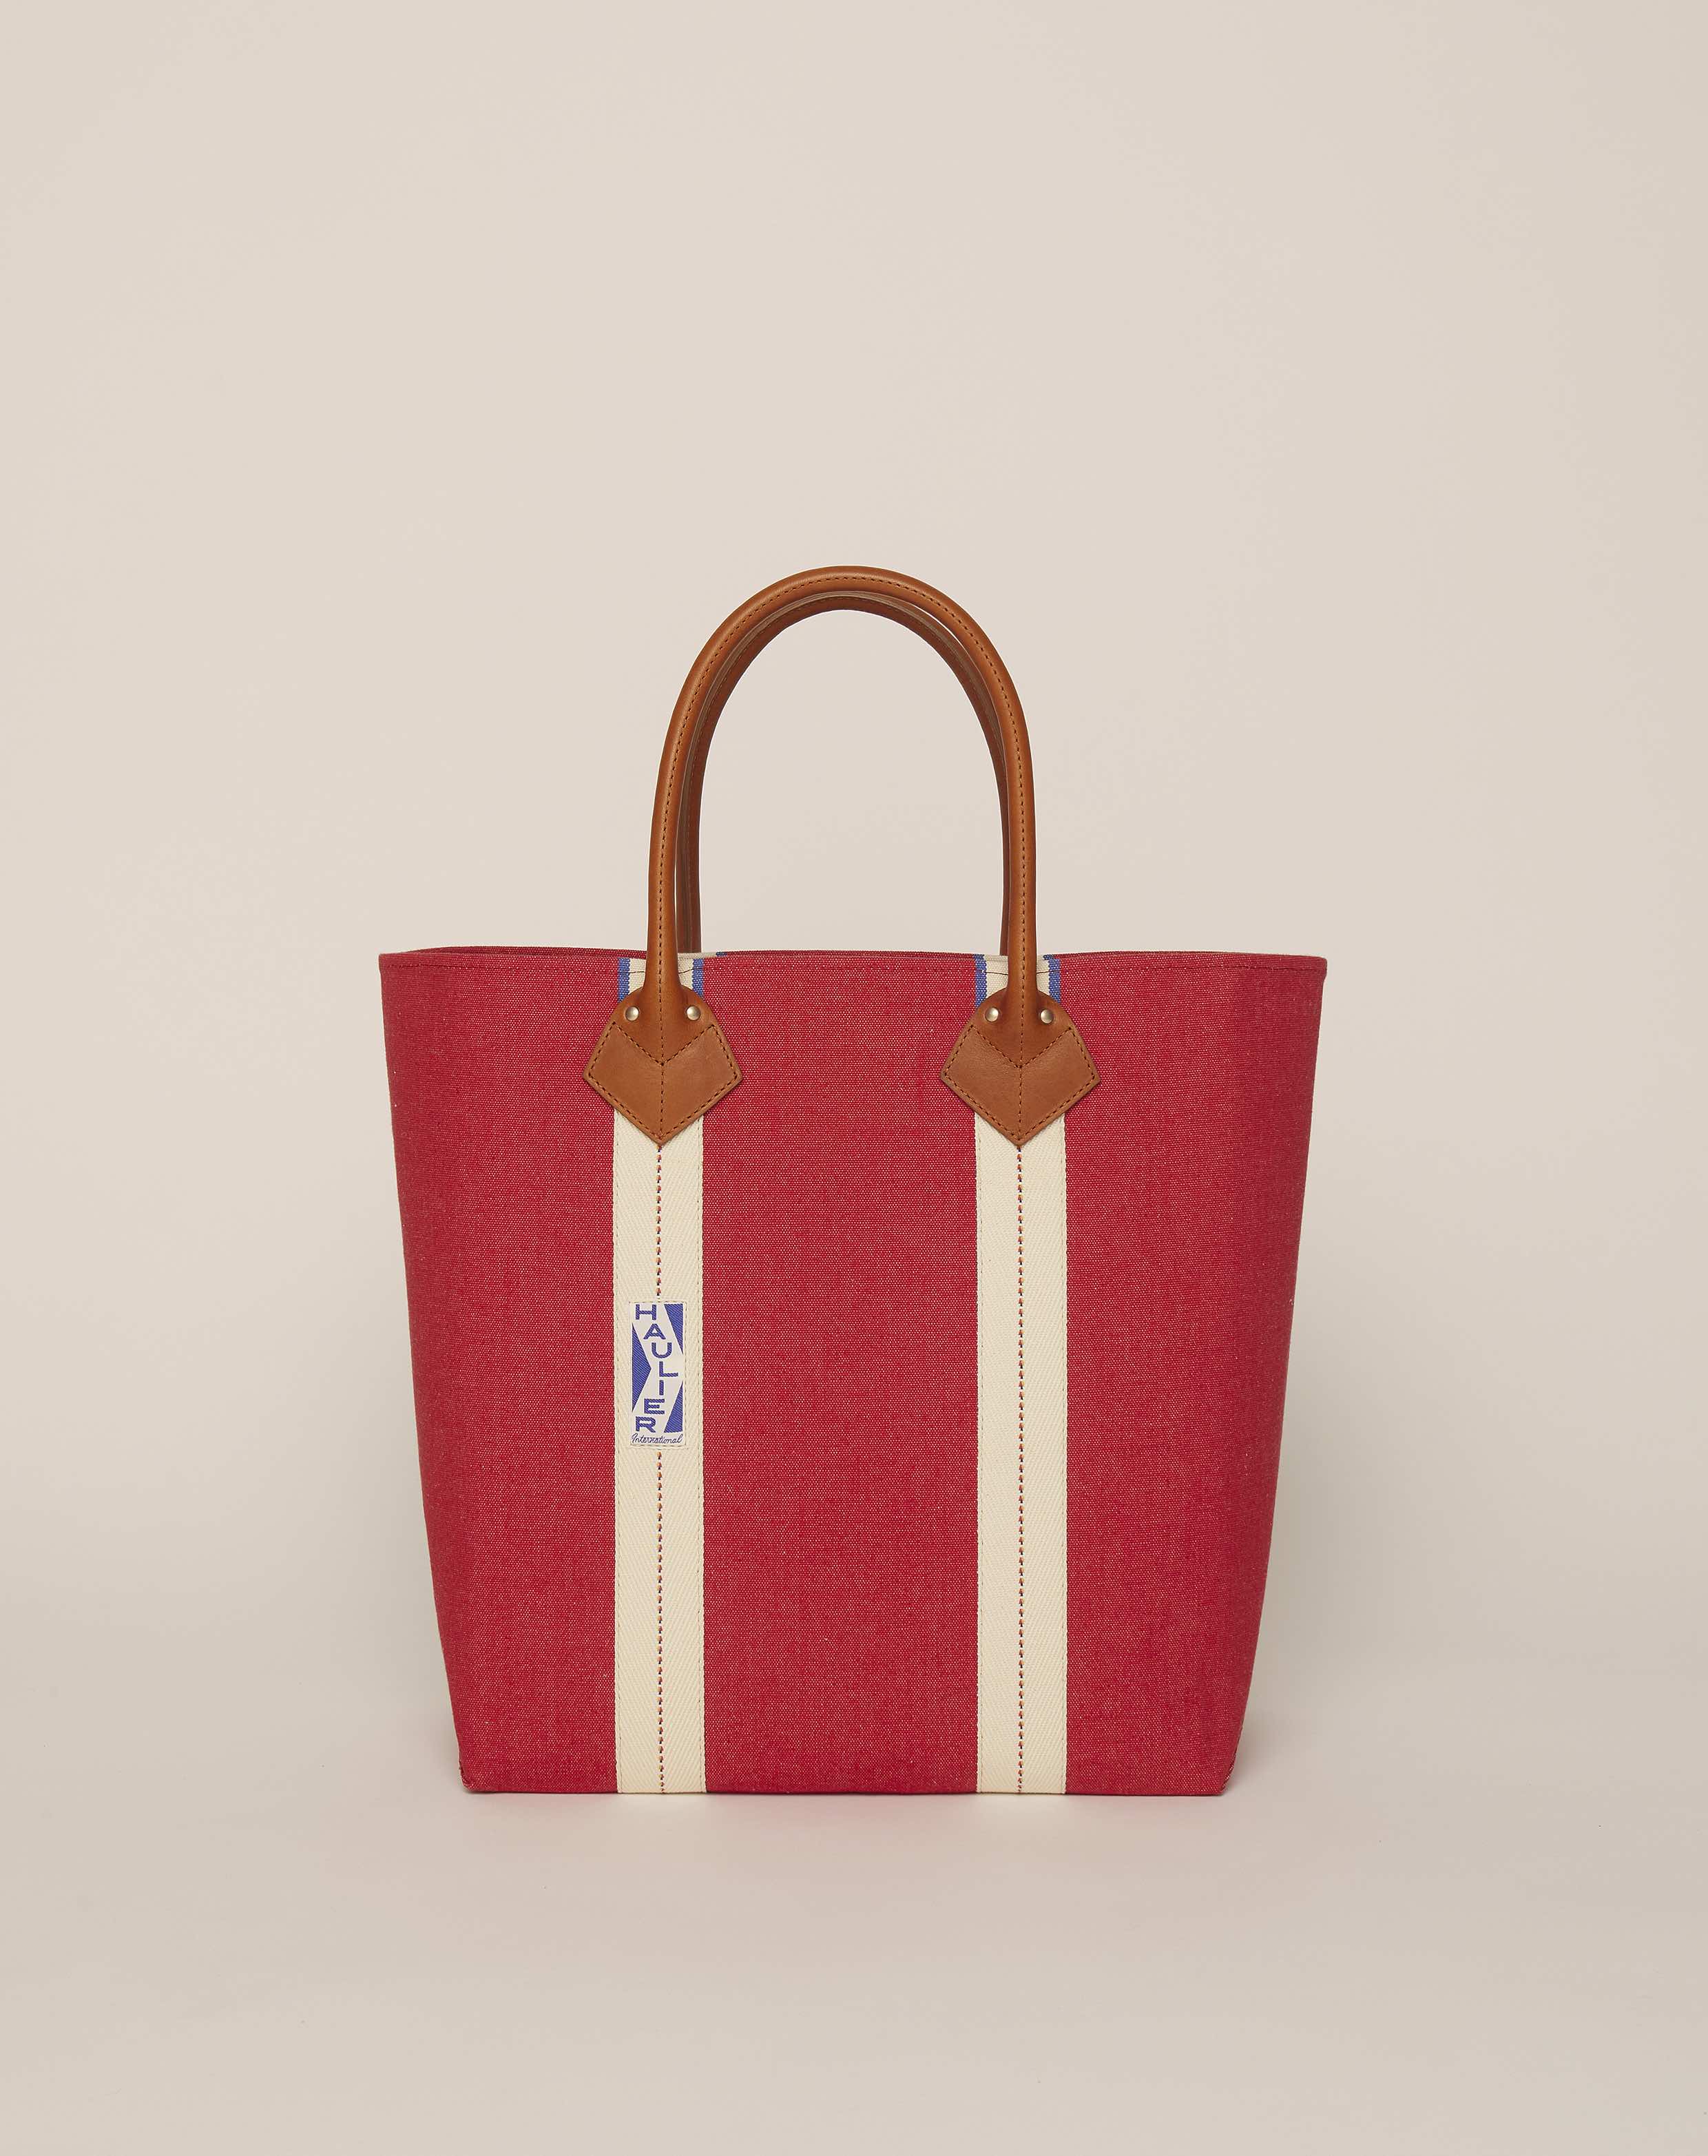 Louis Vuitton City Steamer Medium Model Handbag in Blue and Red Smooth